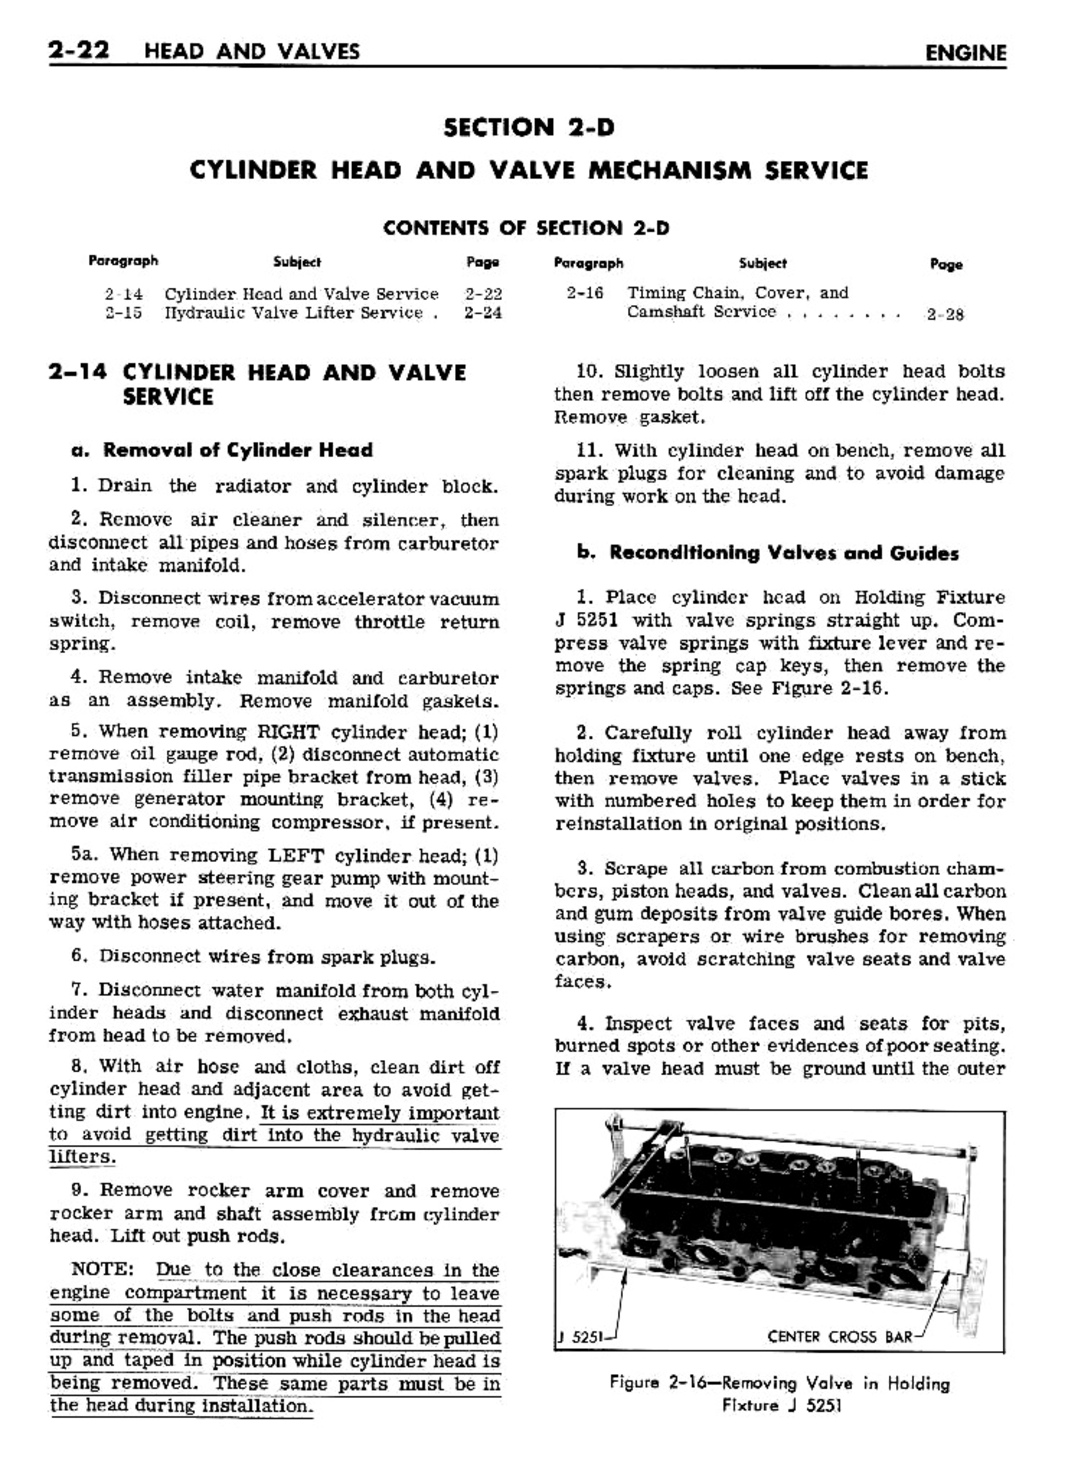 n_03 1961 Buick Shop Manual - Engine-022-022.jpg